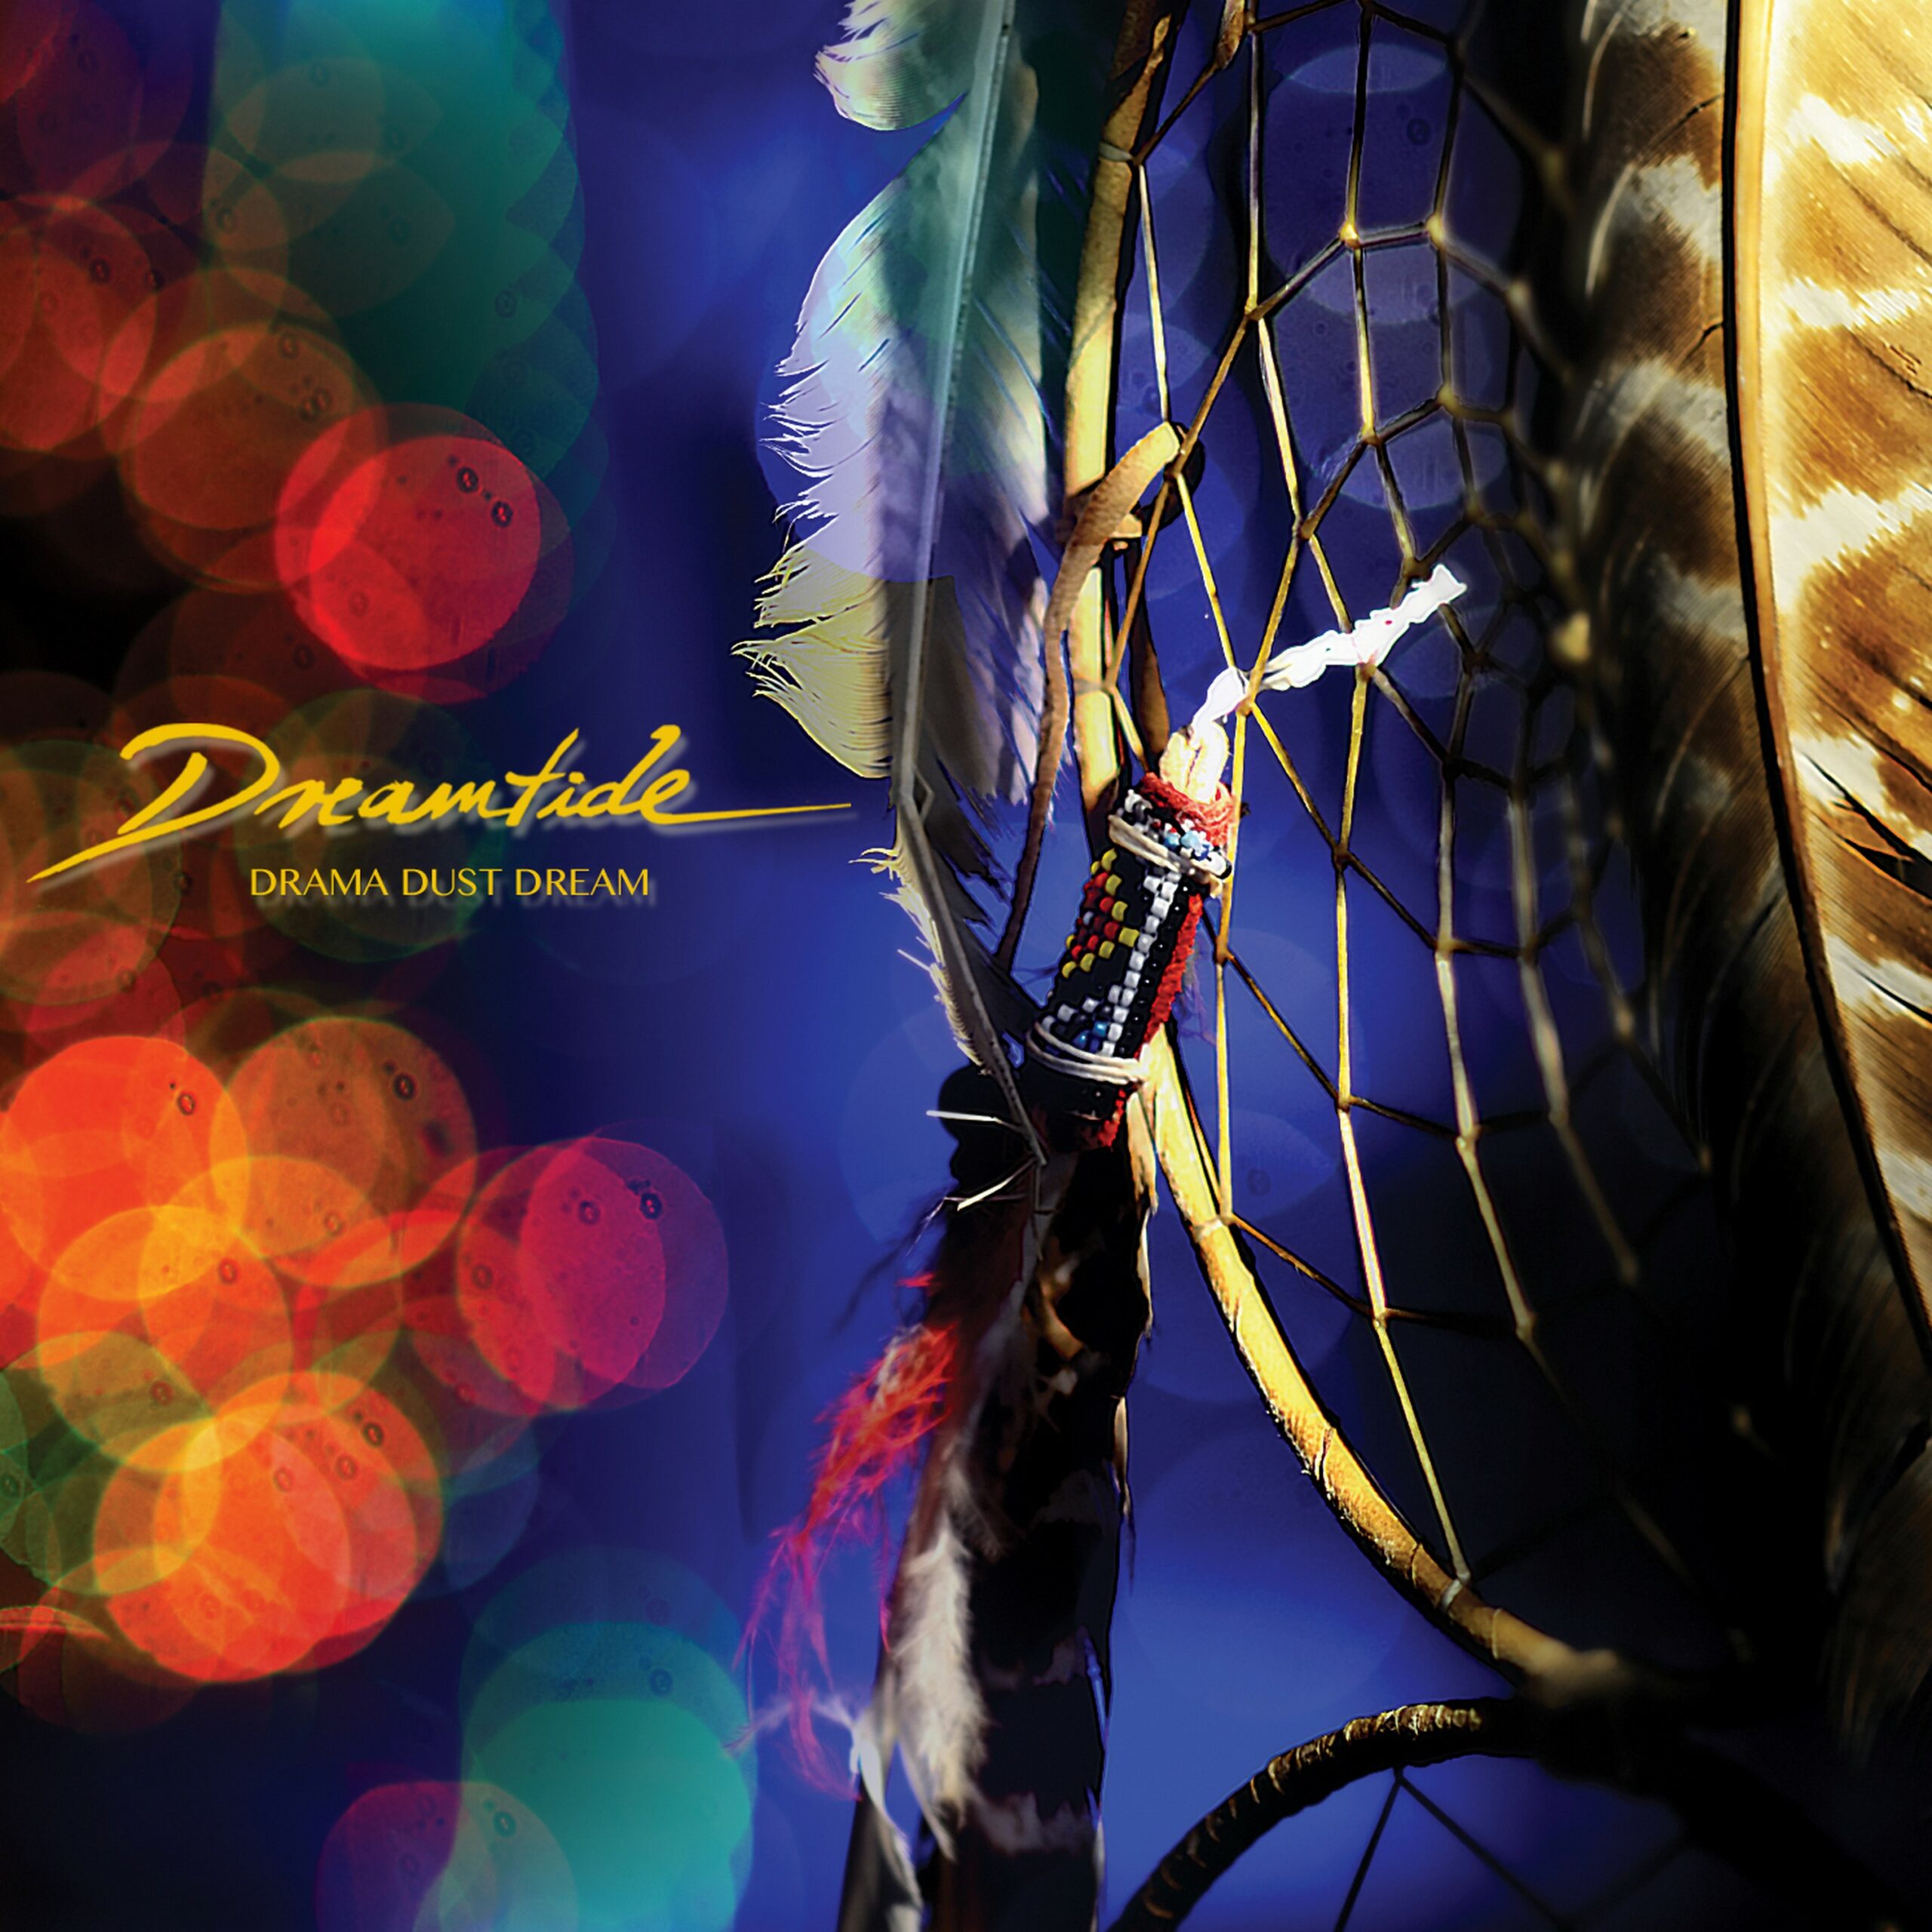 Dreamtide (D) – Drama Dust Dream